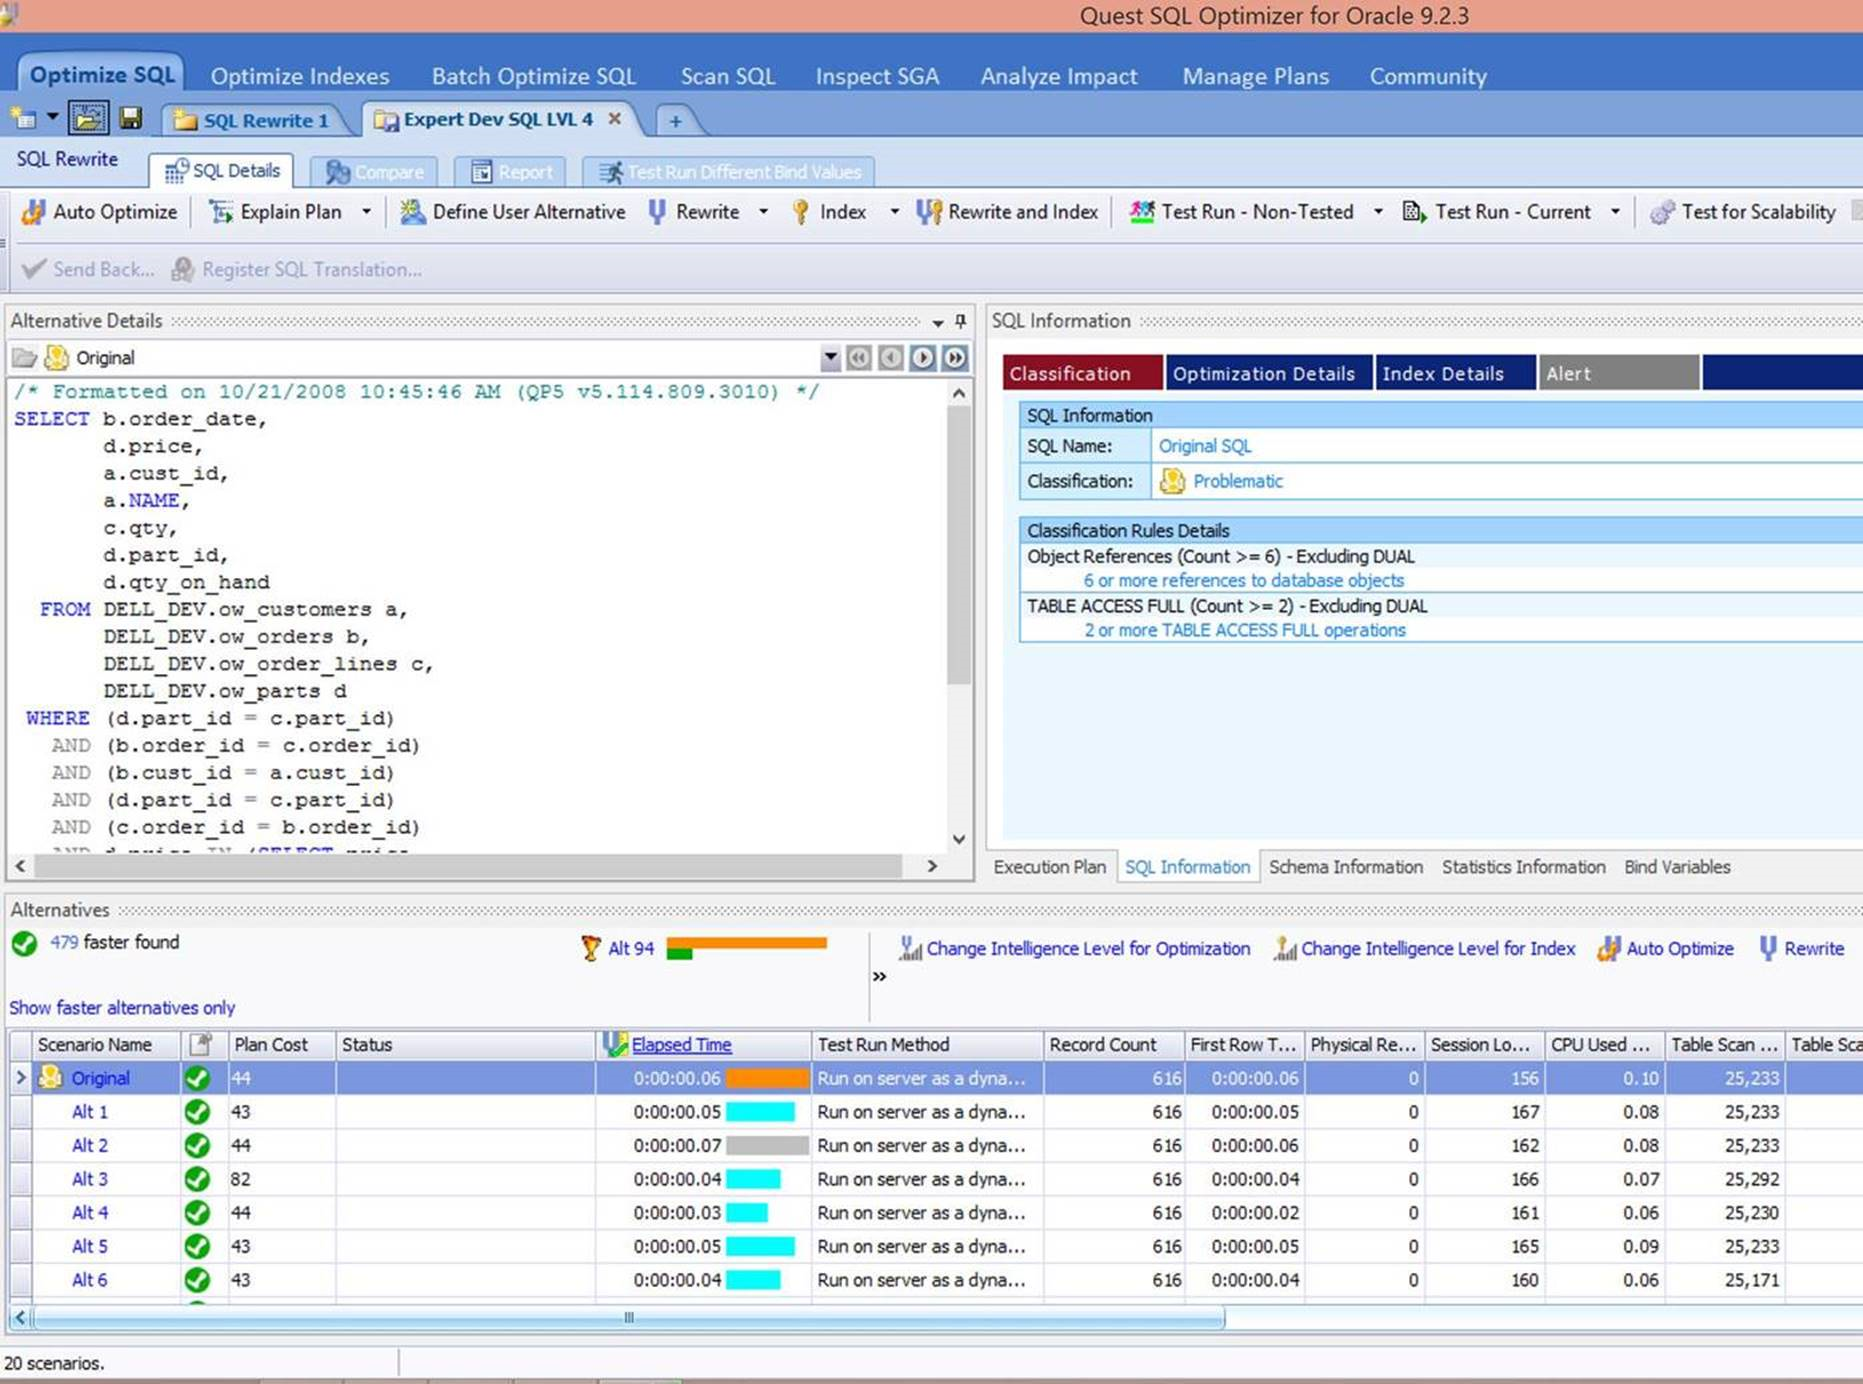 Screen shot : After SQL Optimizer has been run.